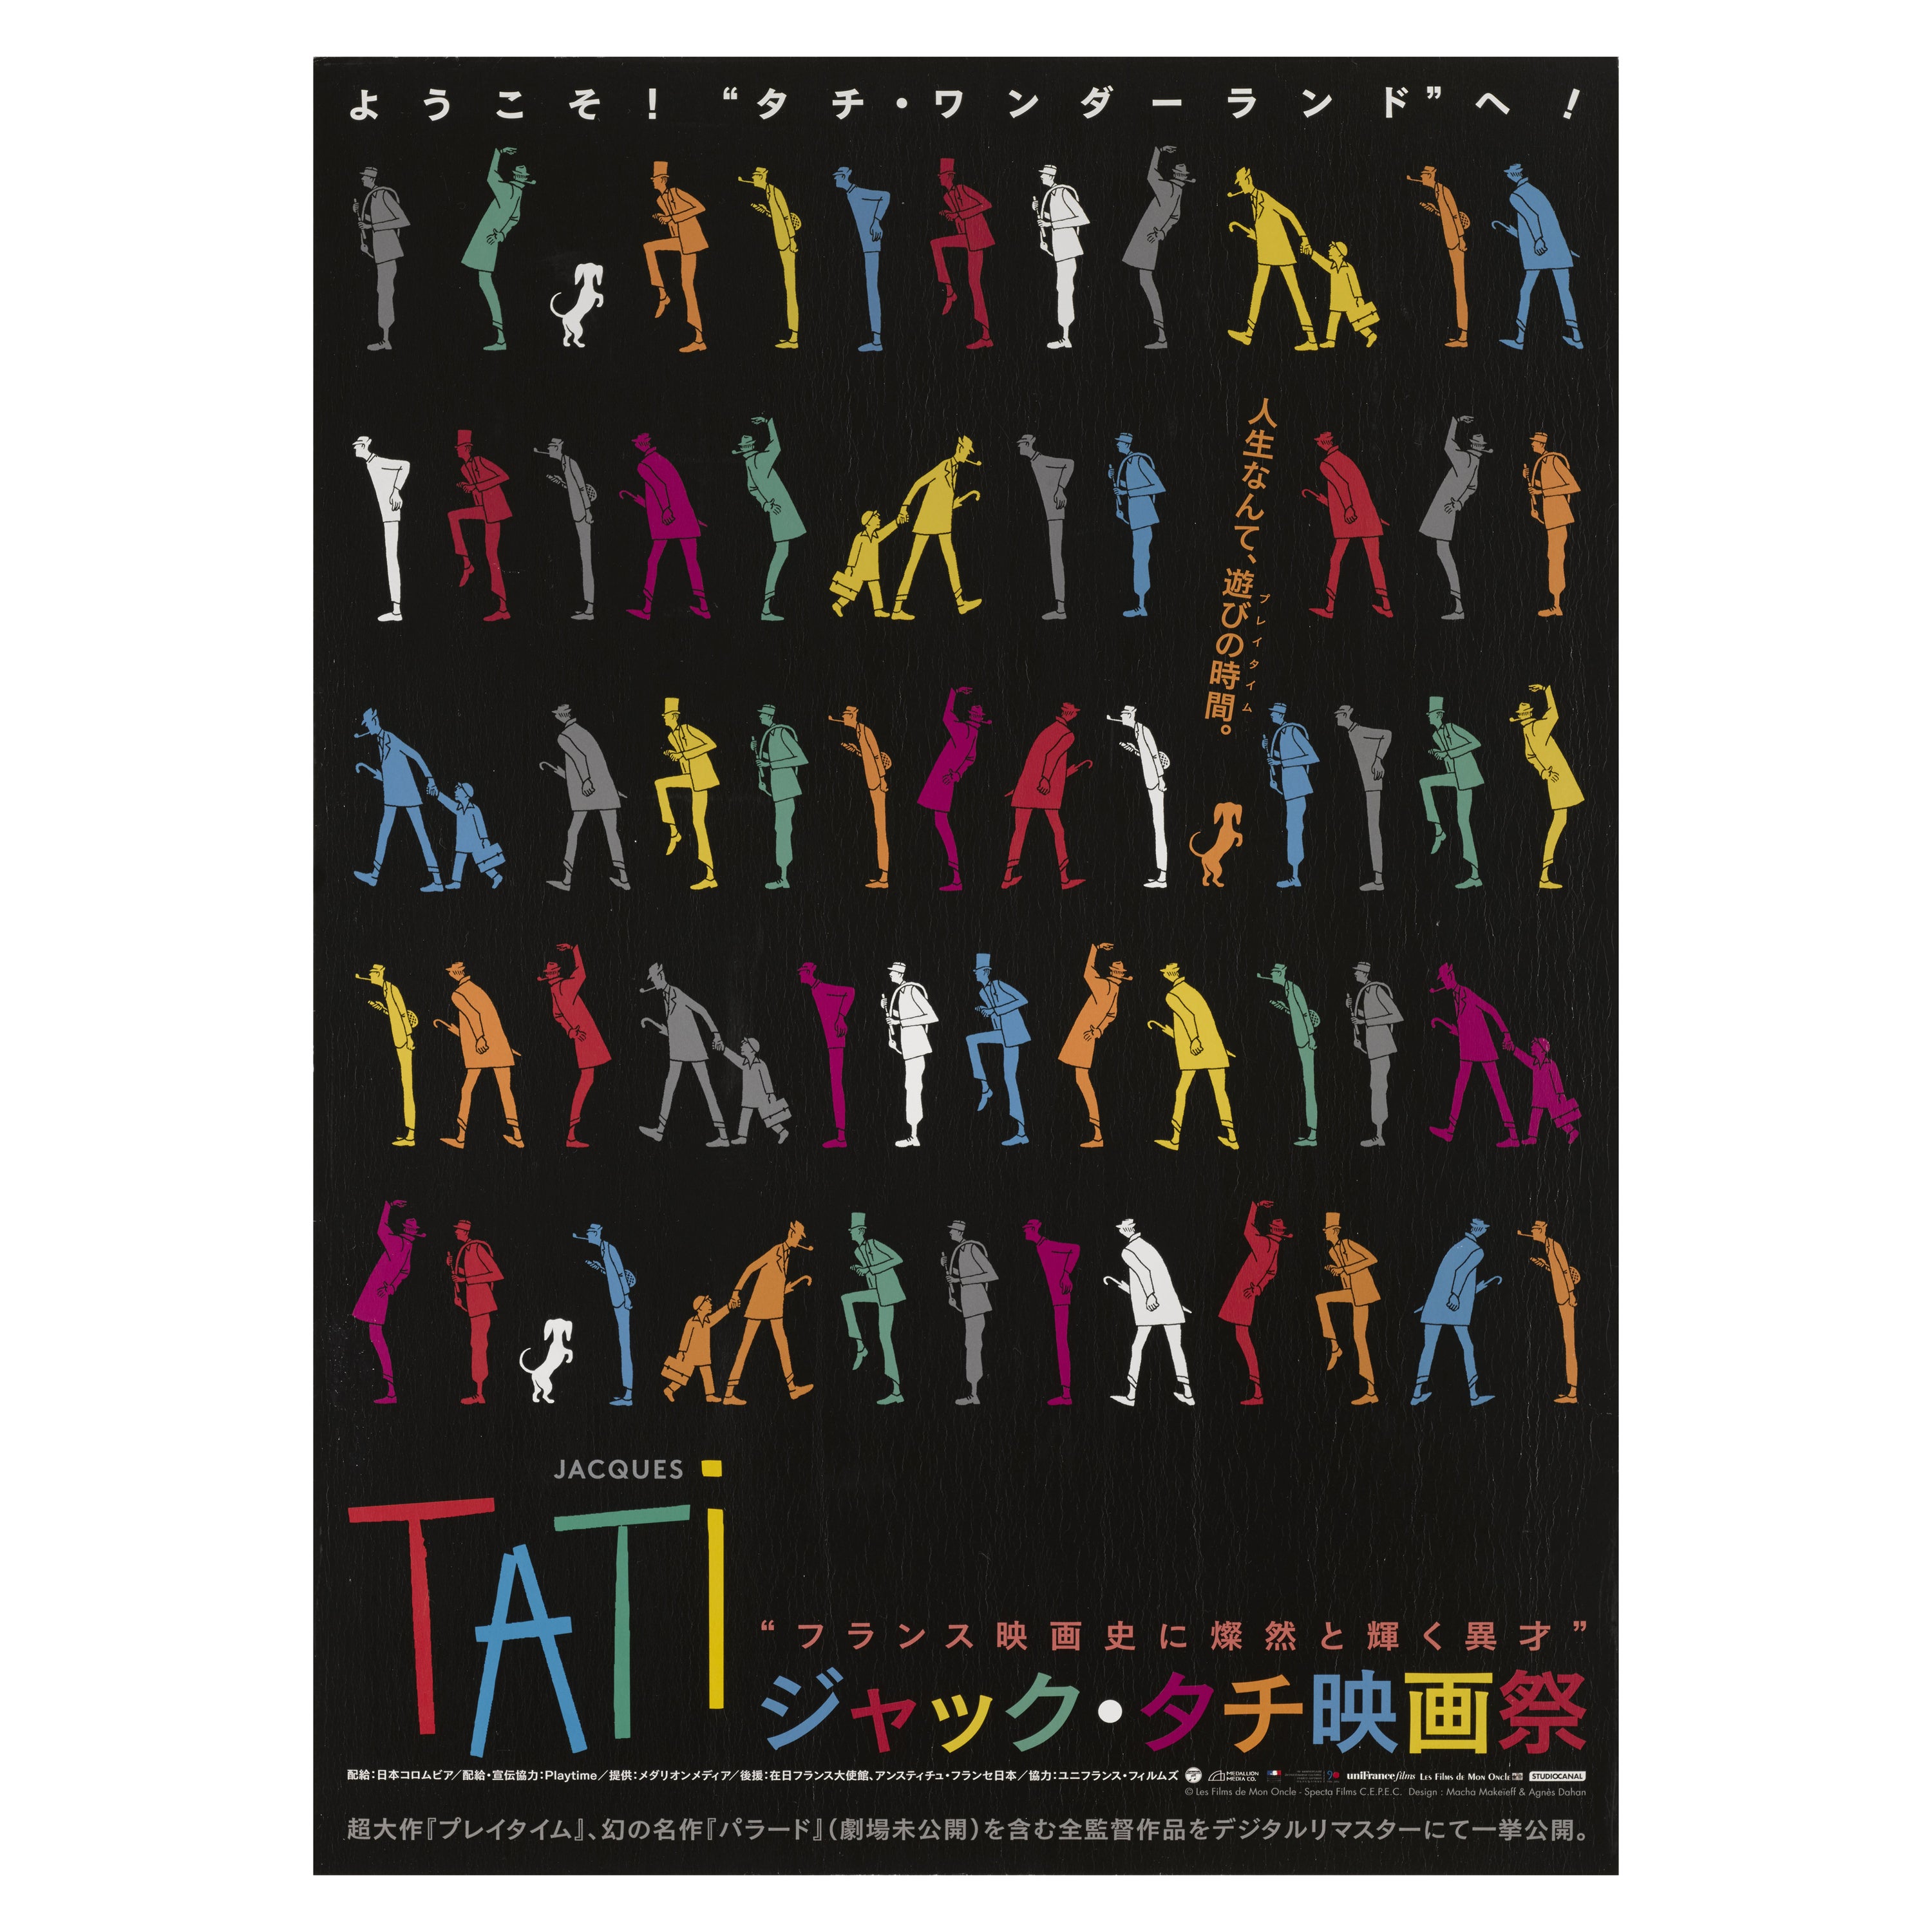 Festival du film Jacques Tati en vente